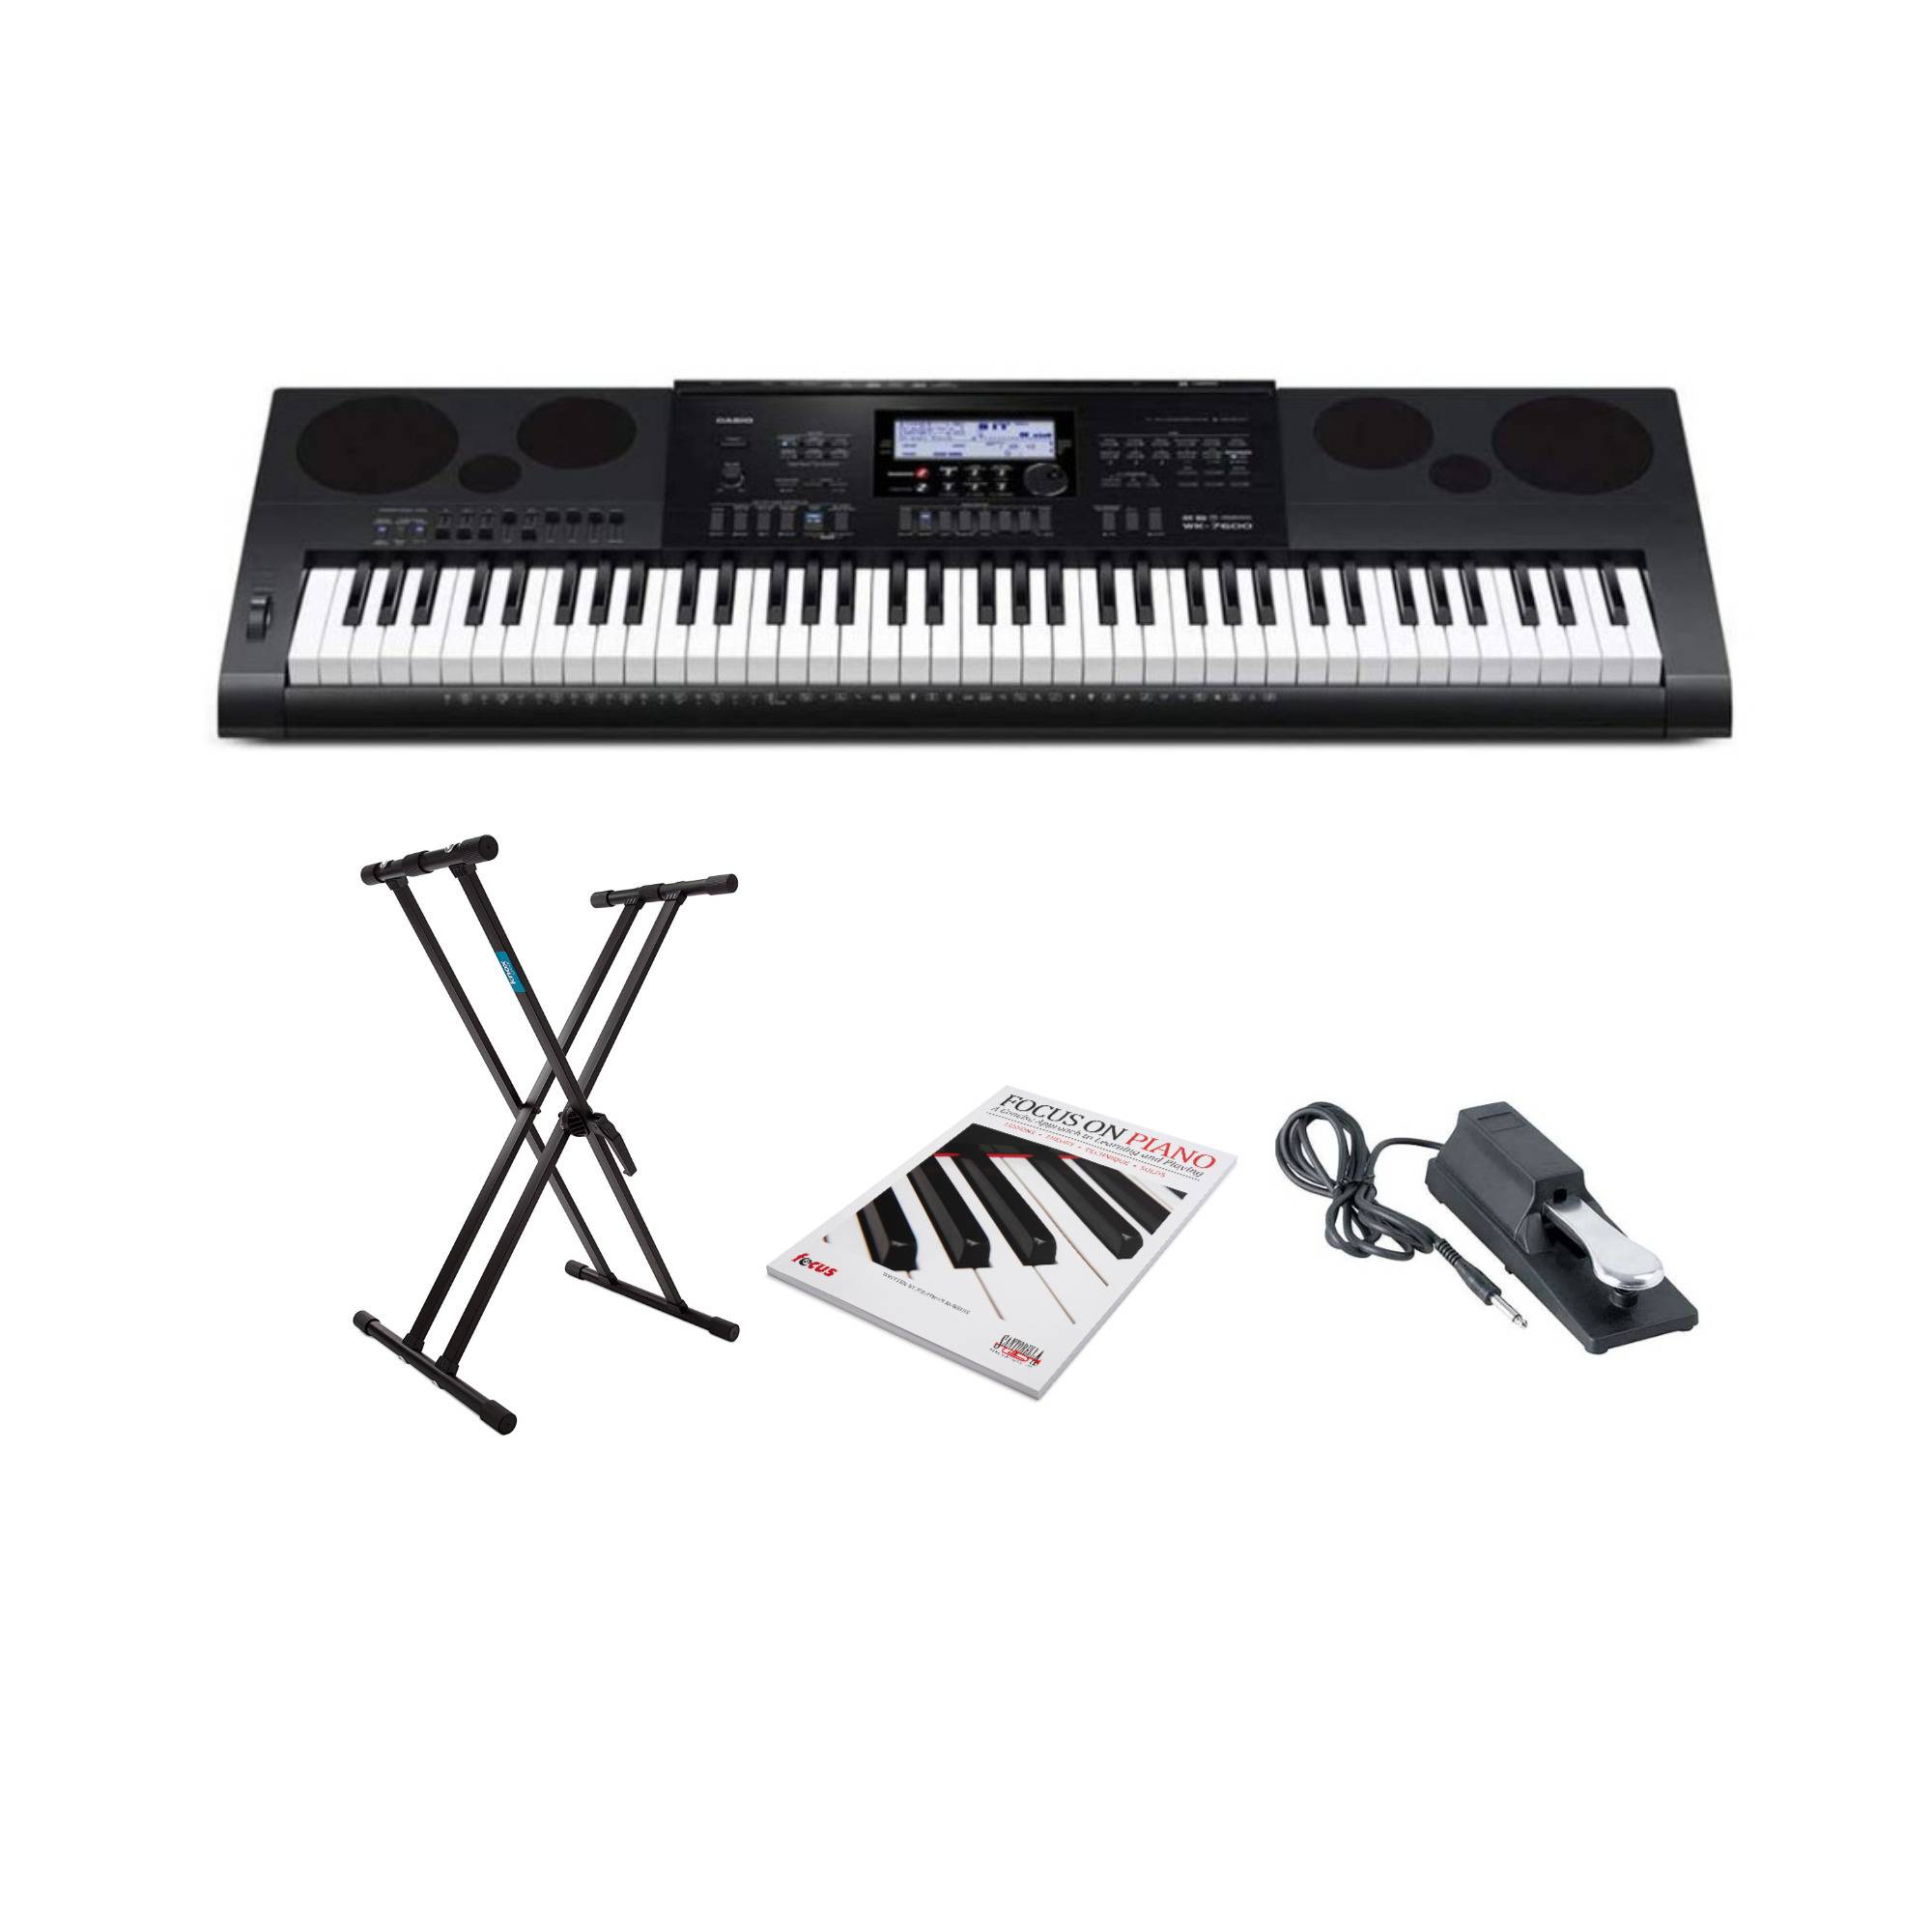 Casio WK-7600 76-Key Workstation Keyboard with Adjustable Keyboard Stand, Sustain Pedal Bundle